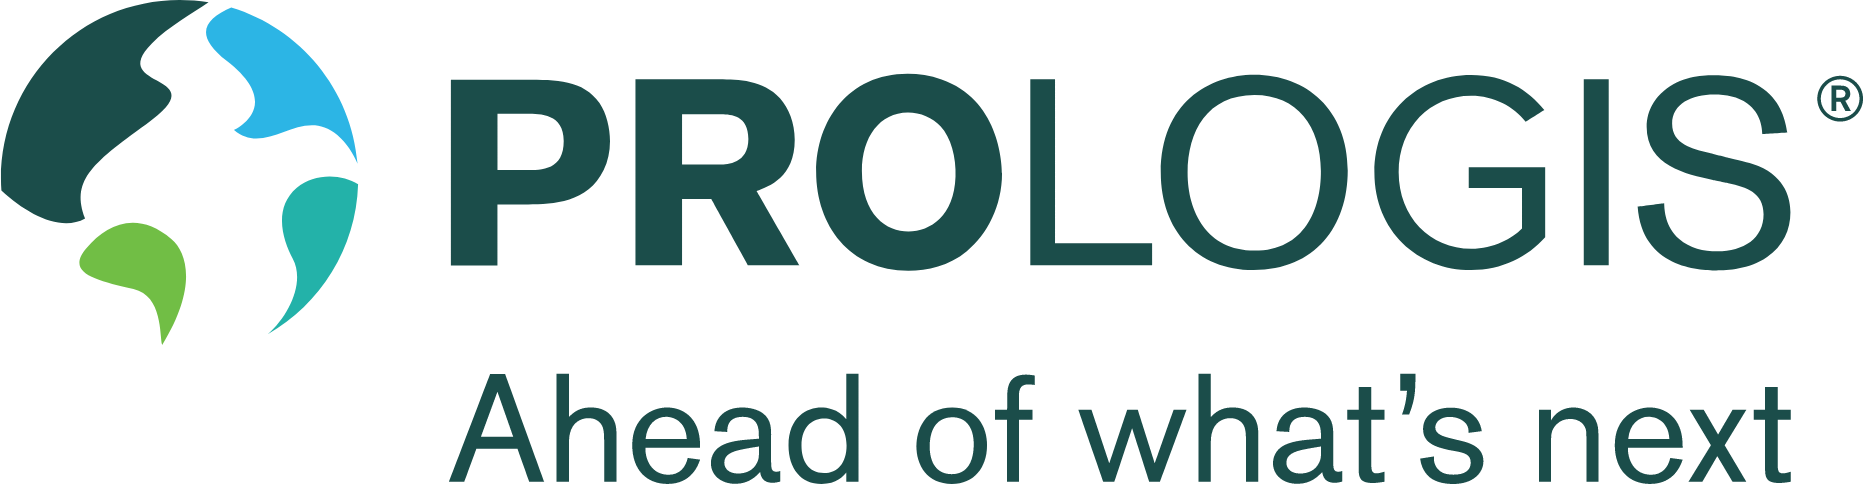 Prologis logo large (transparent PNG)